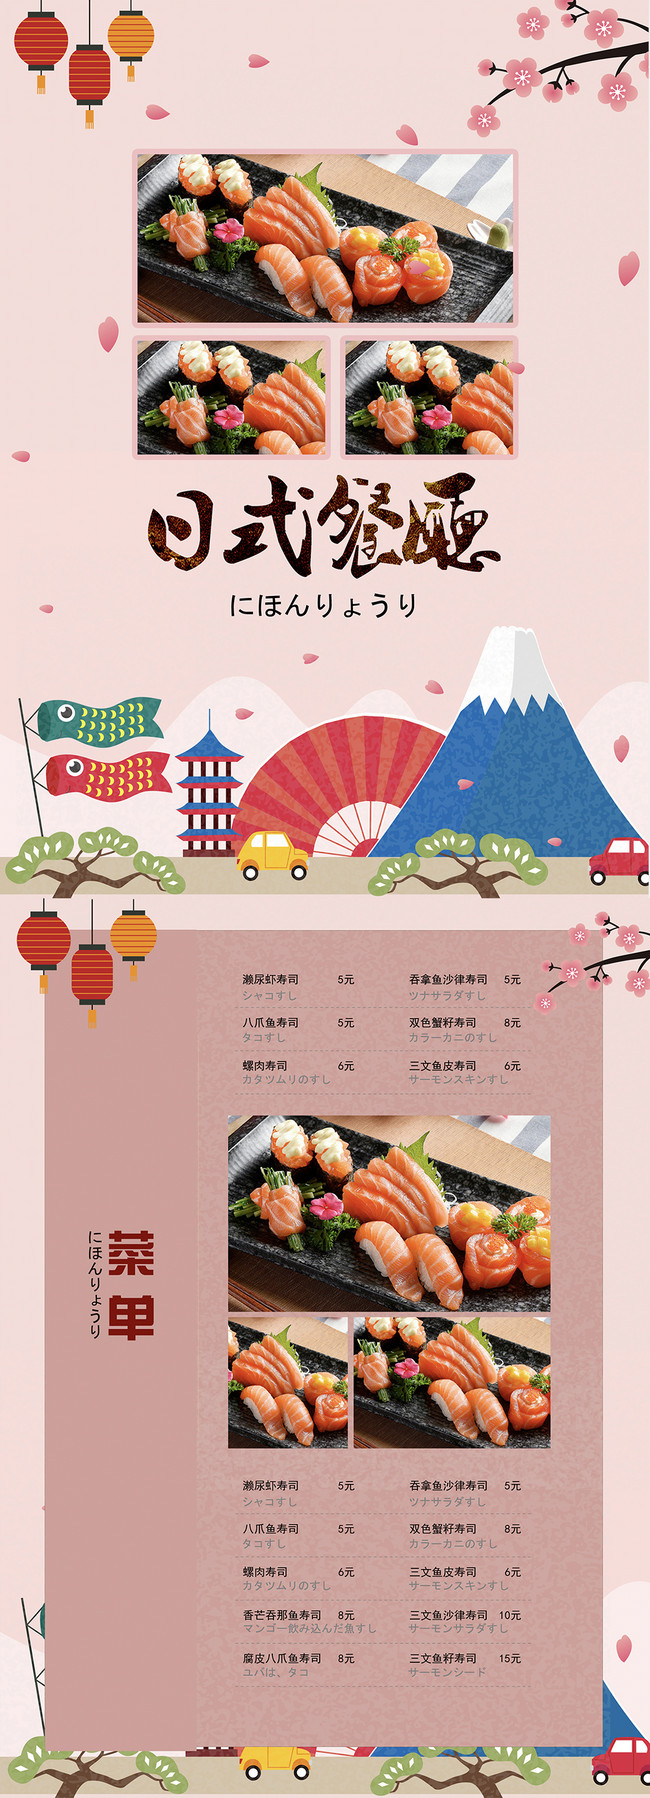 Menu Menu For Japanese Restaurant Template Image Picture Free Download Lovepik Com